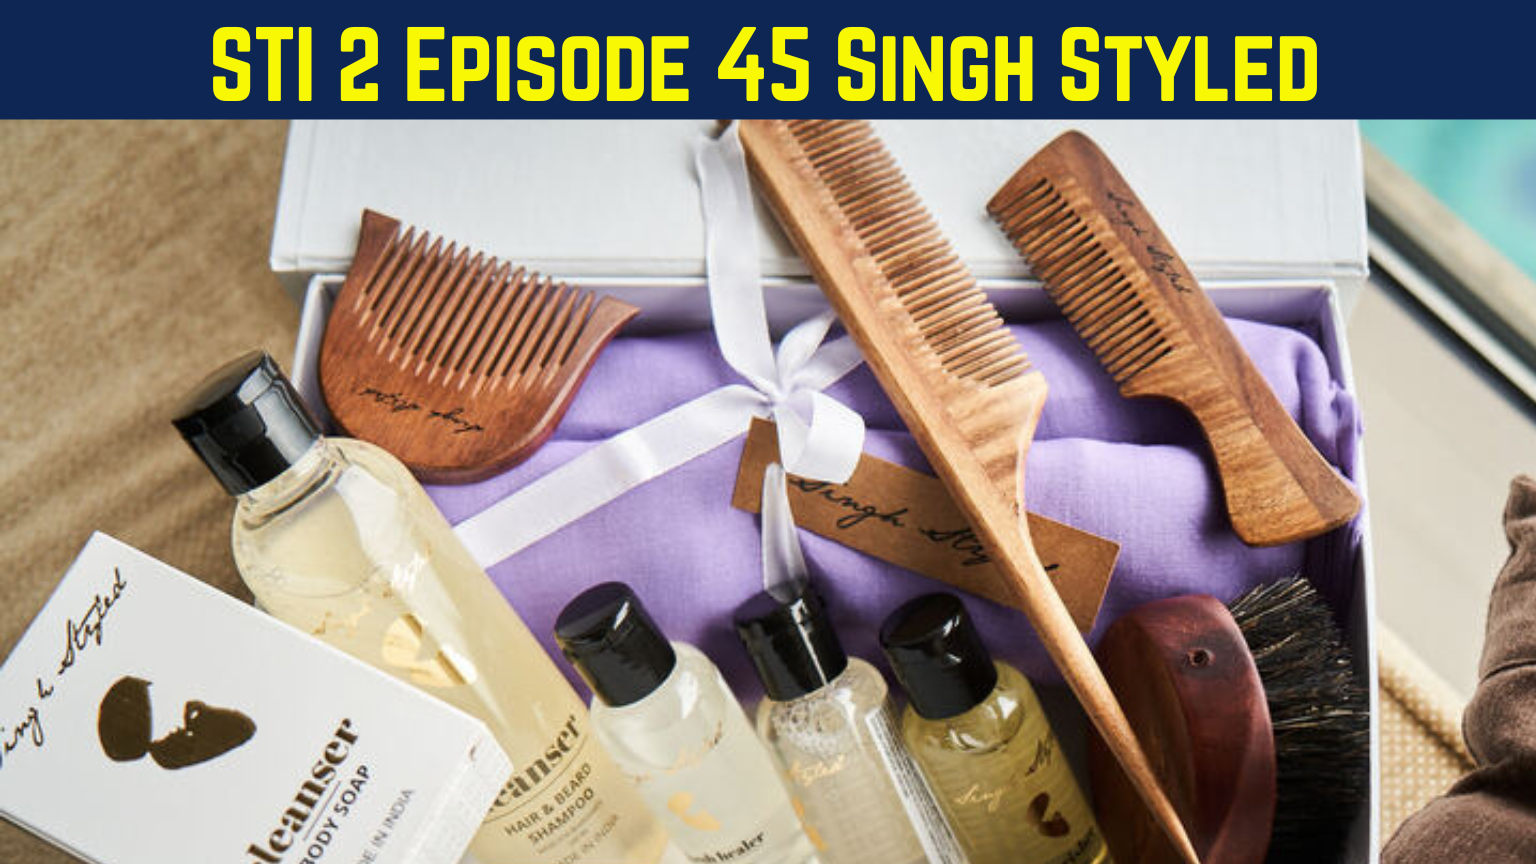 Singh Styled Shark Tank India Season 2 Episode 45 - Shark Tank India